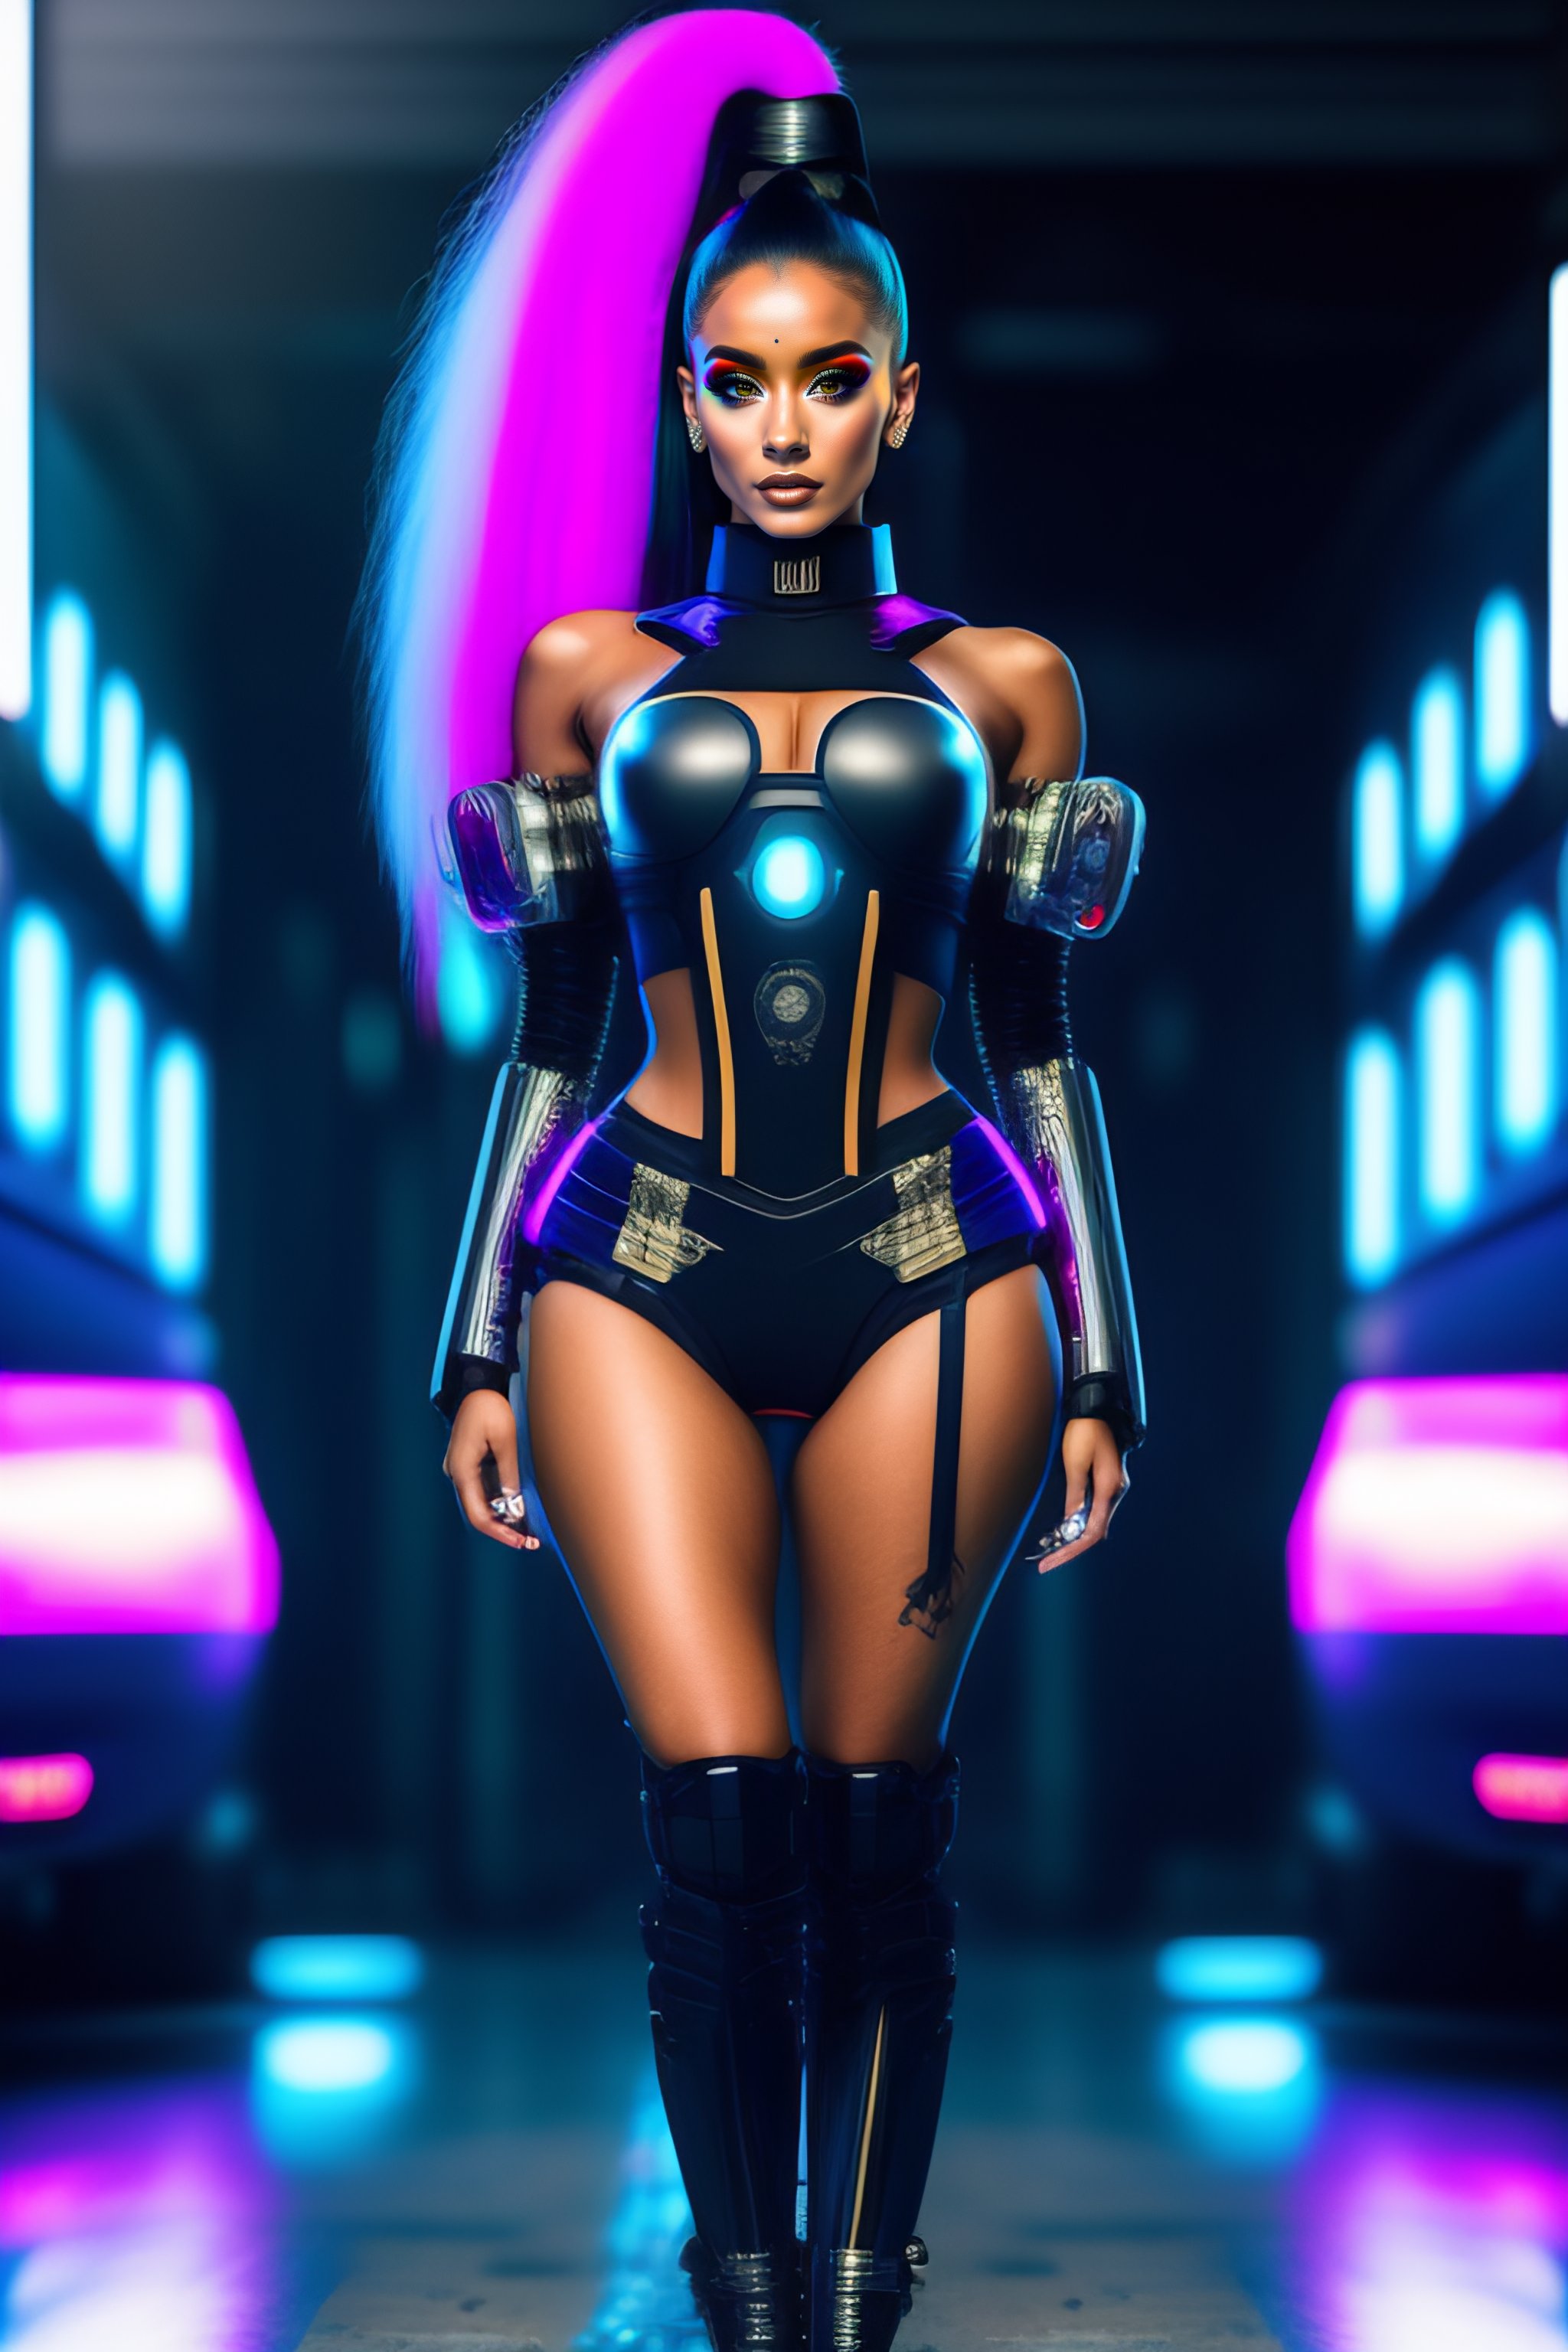 Lexica cyberpunk female robot Grande body